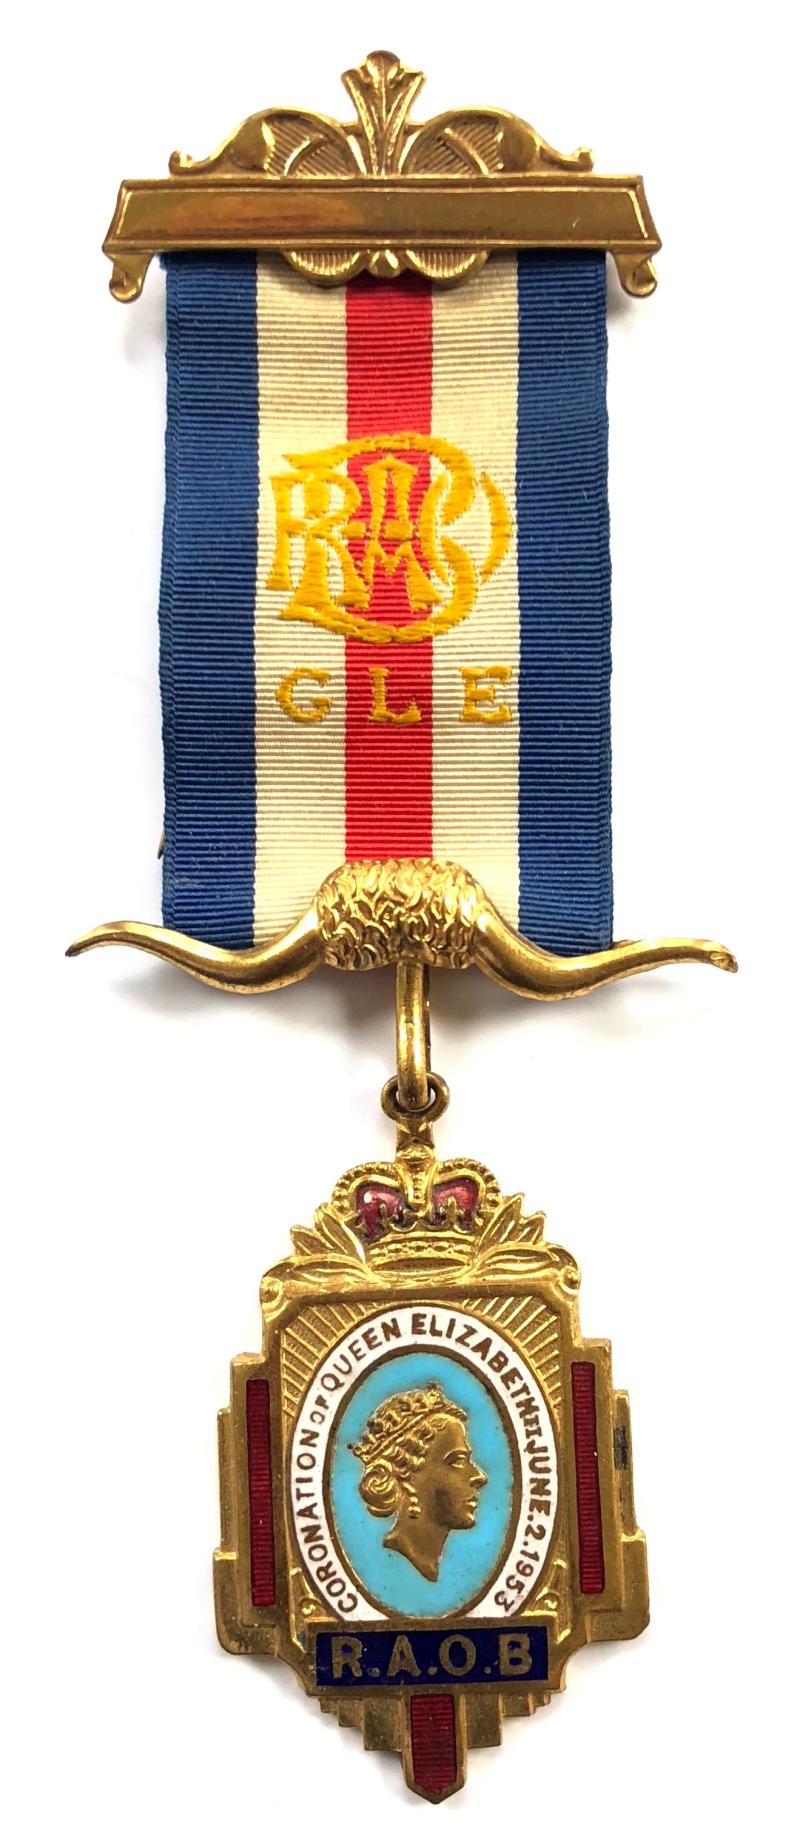 Queen Elizabeth II 1953 Coronation RAOB medal